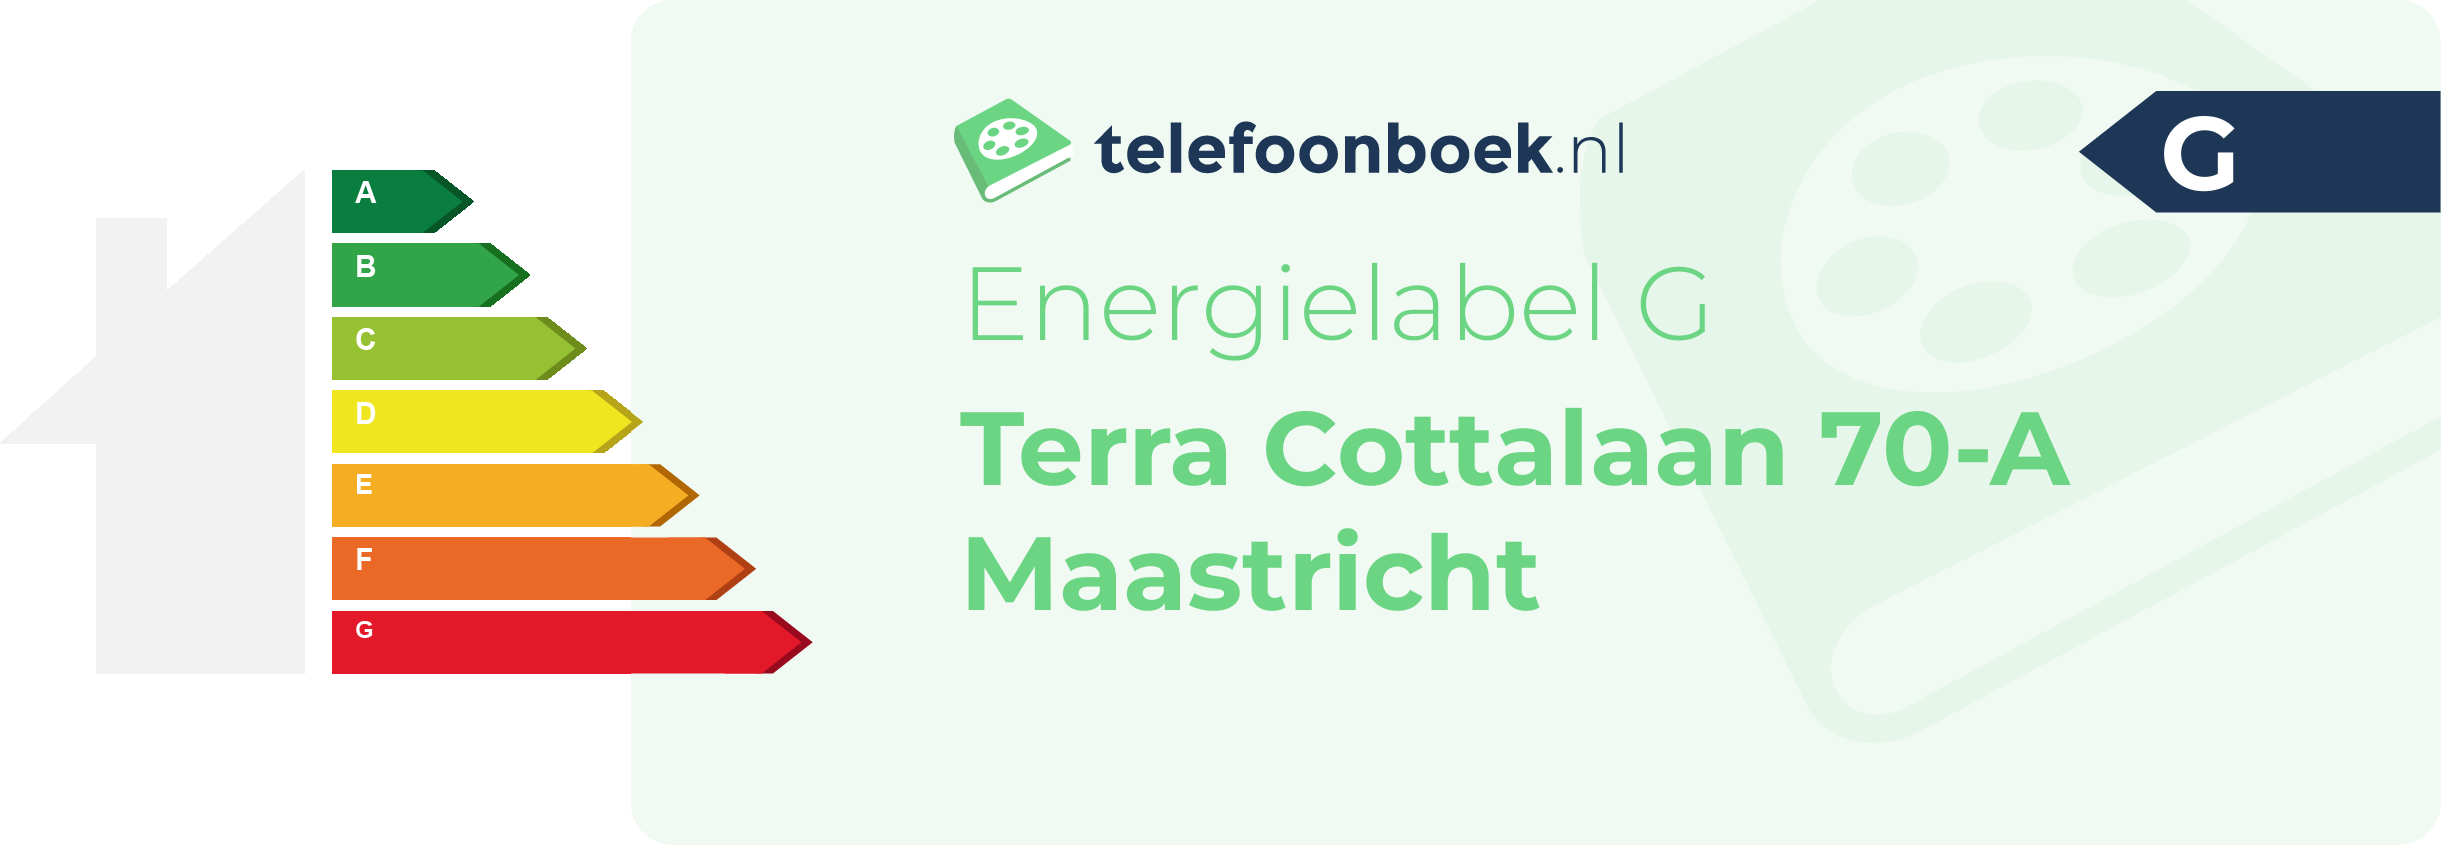 Energielabel Terra Cottalaan 70-A Maastricht